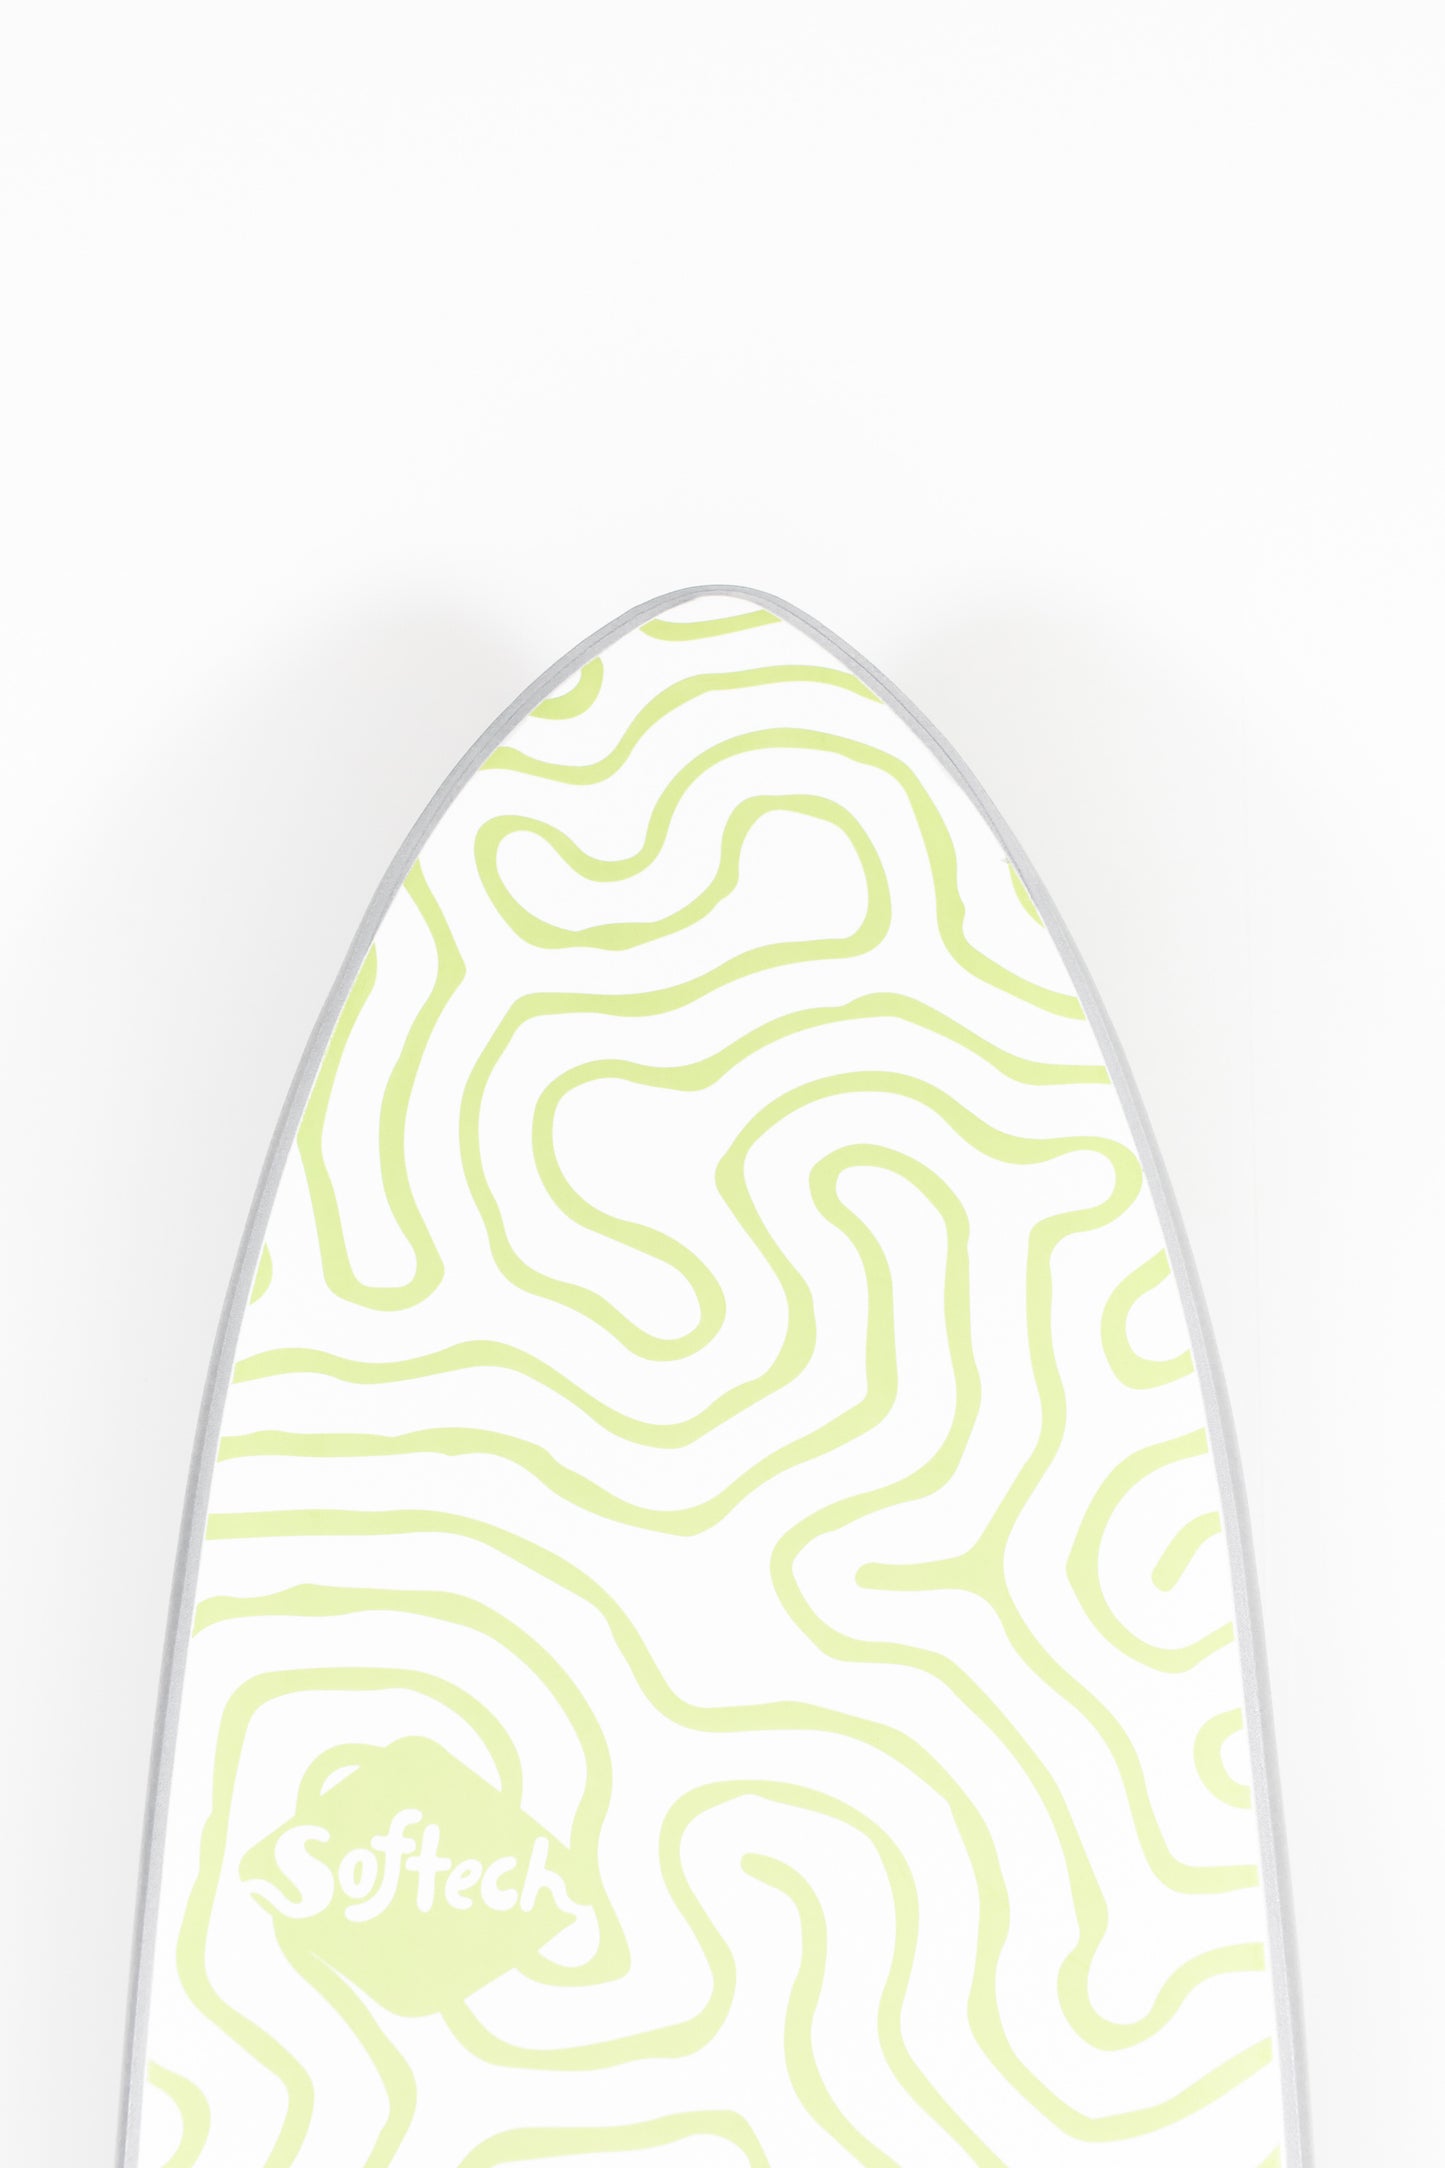 
                  
                    Pukas Surf Shop - SOFTECH - BRAINCHILD 6''6
                  
                